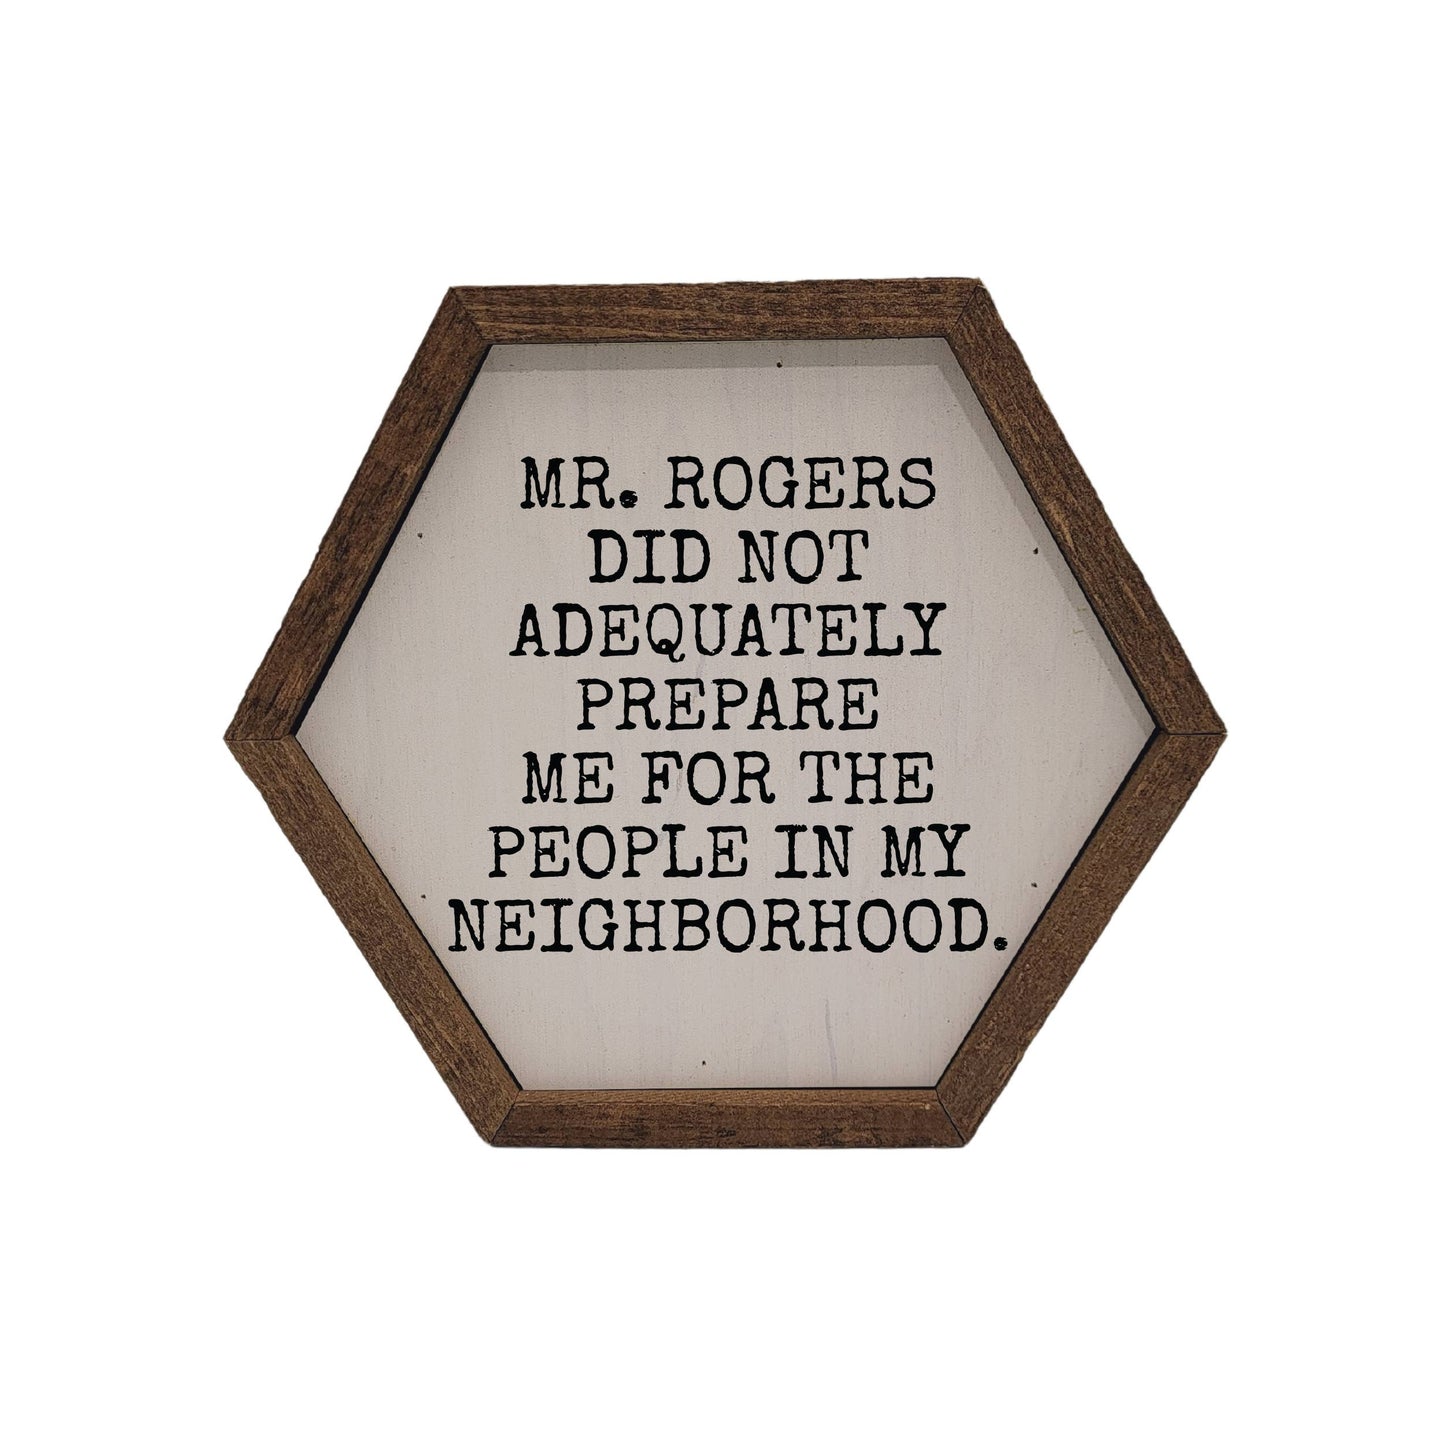 Driftless Studios "Mr. Rogers Neighborhood" Hexagon Sign